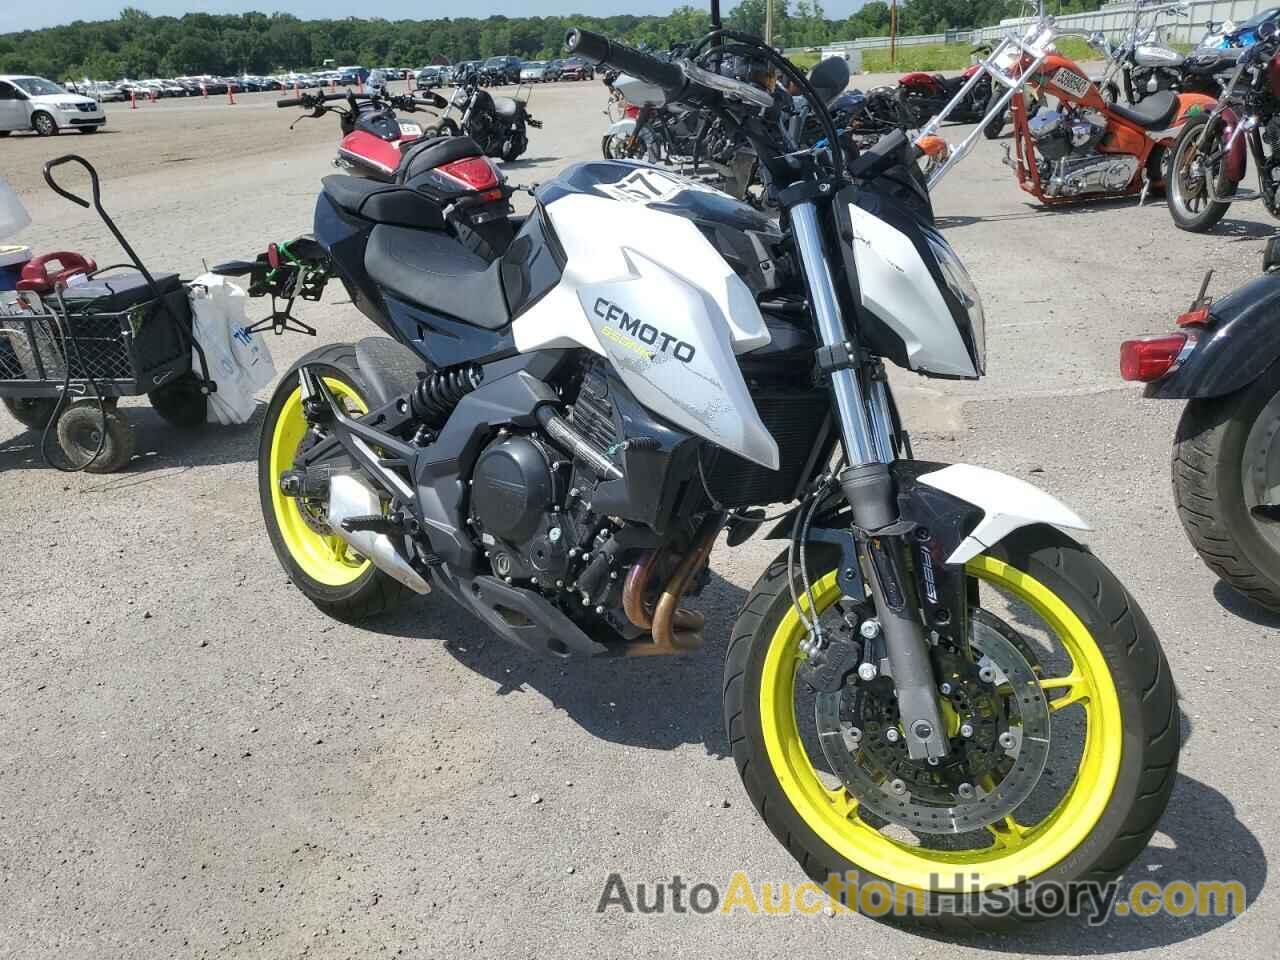 2022 OTHR MOTORCYCLE, LCEPEVLBXN6000490